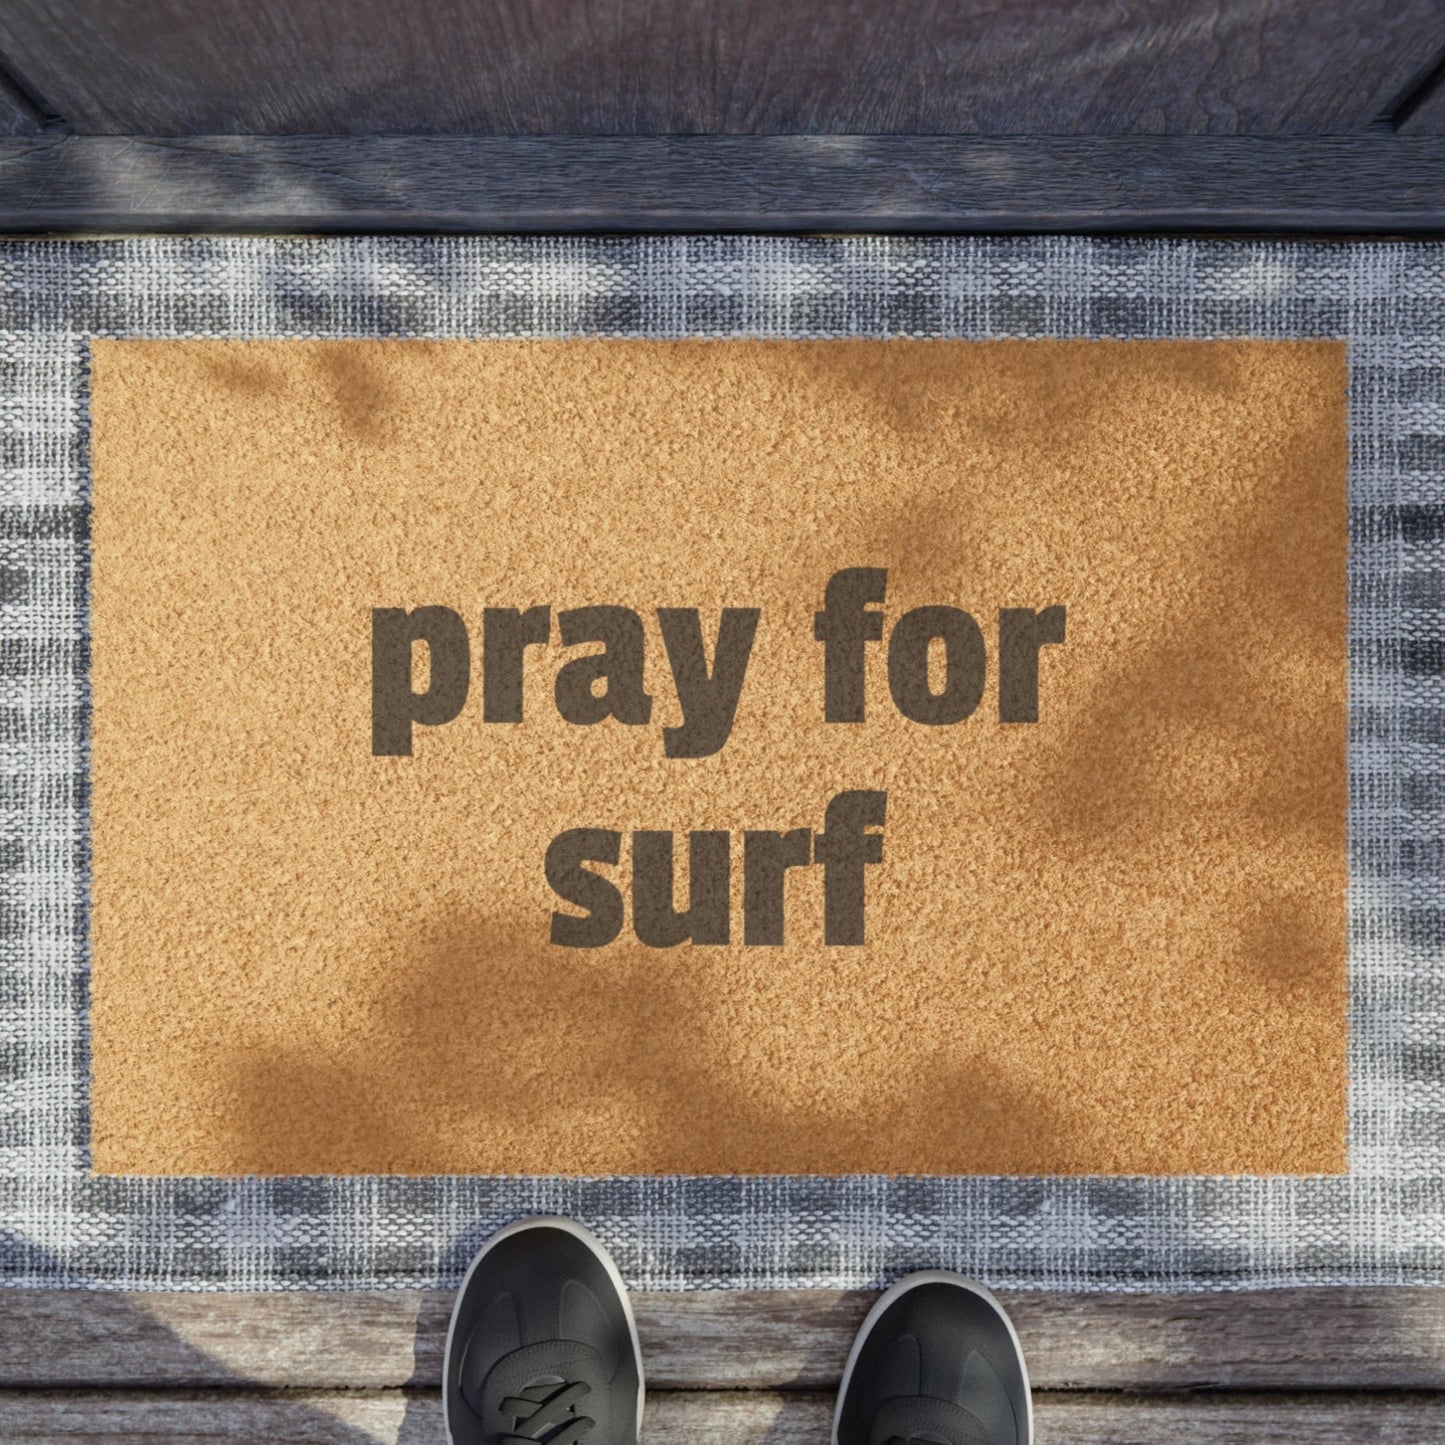 Pray For Surf Doormat